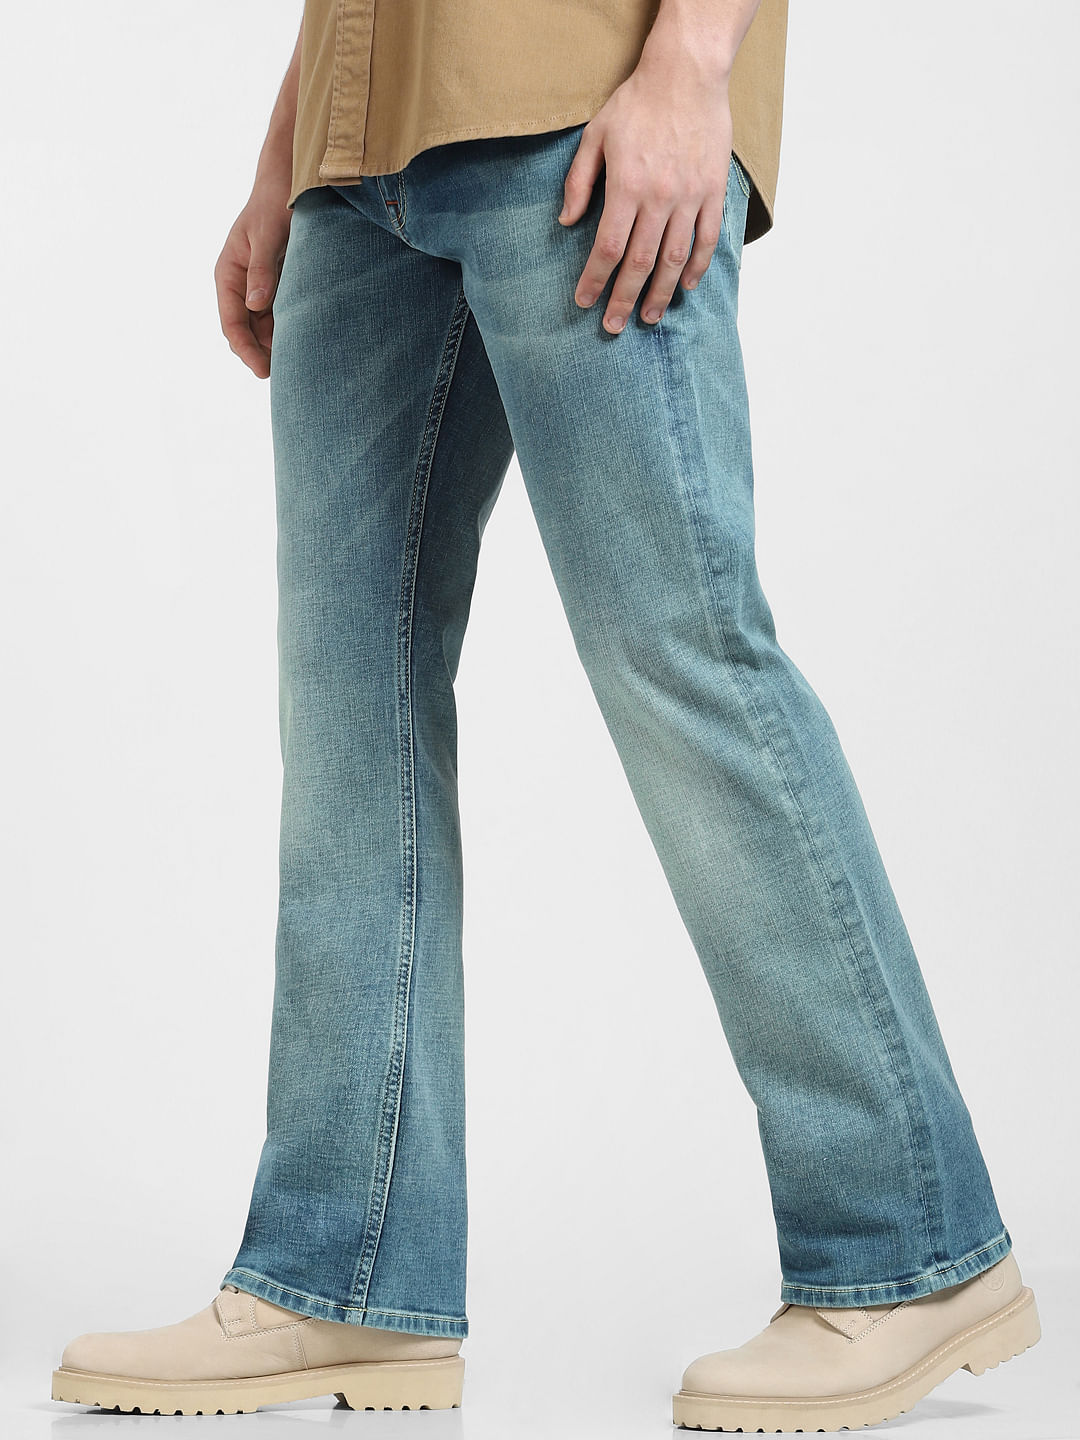 Mens STRETCH Bootcut Jeans Wide Leg Pants Wide Leg Flared Bell Bottom Denim  | eBay